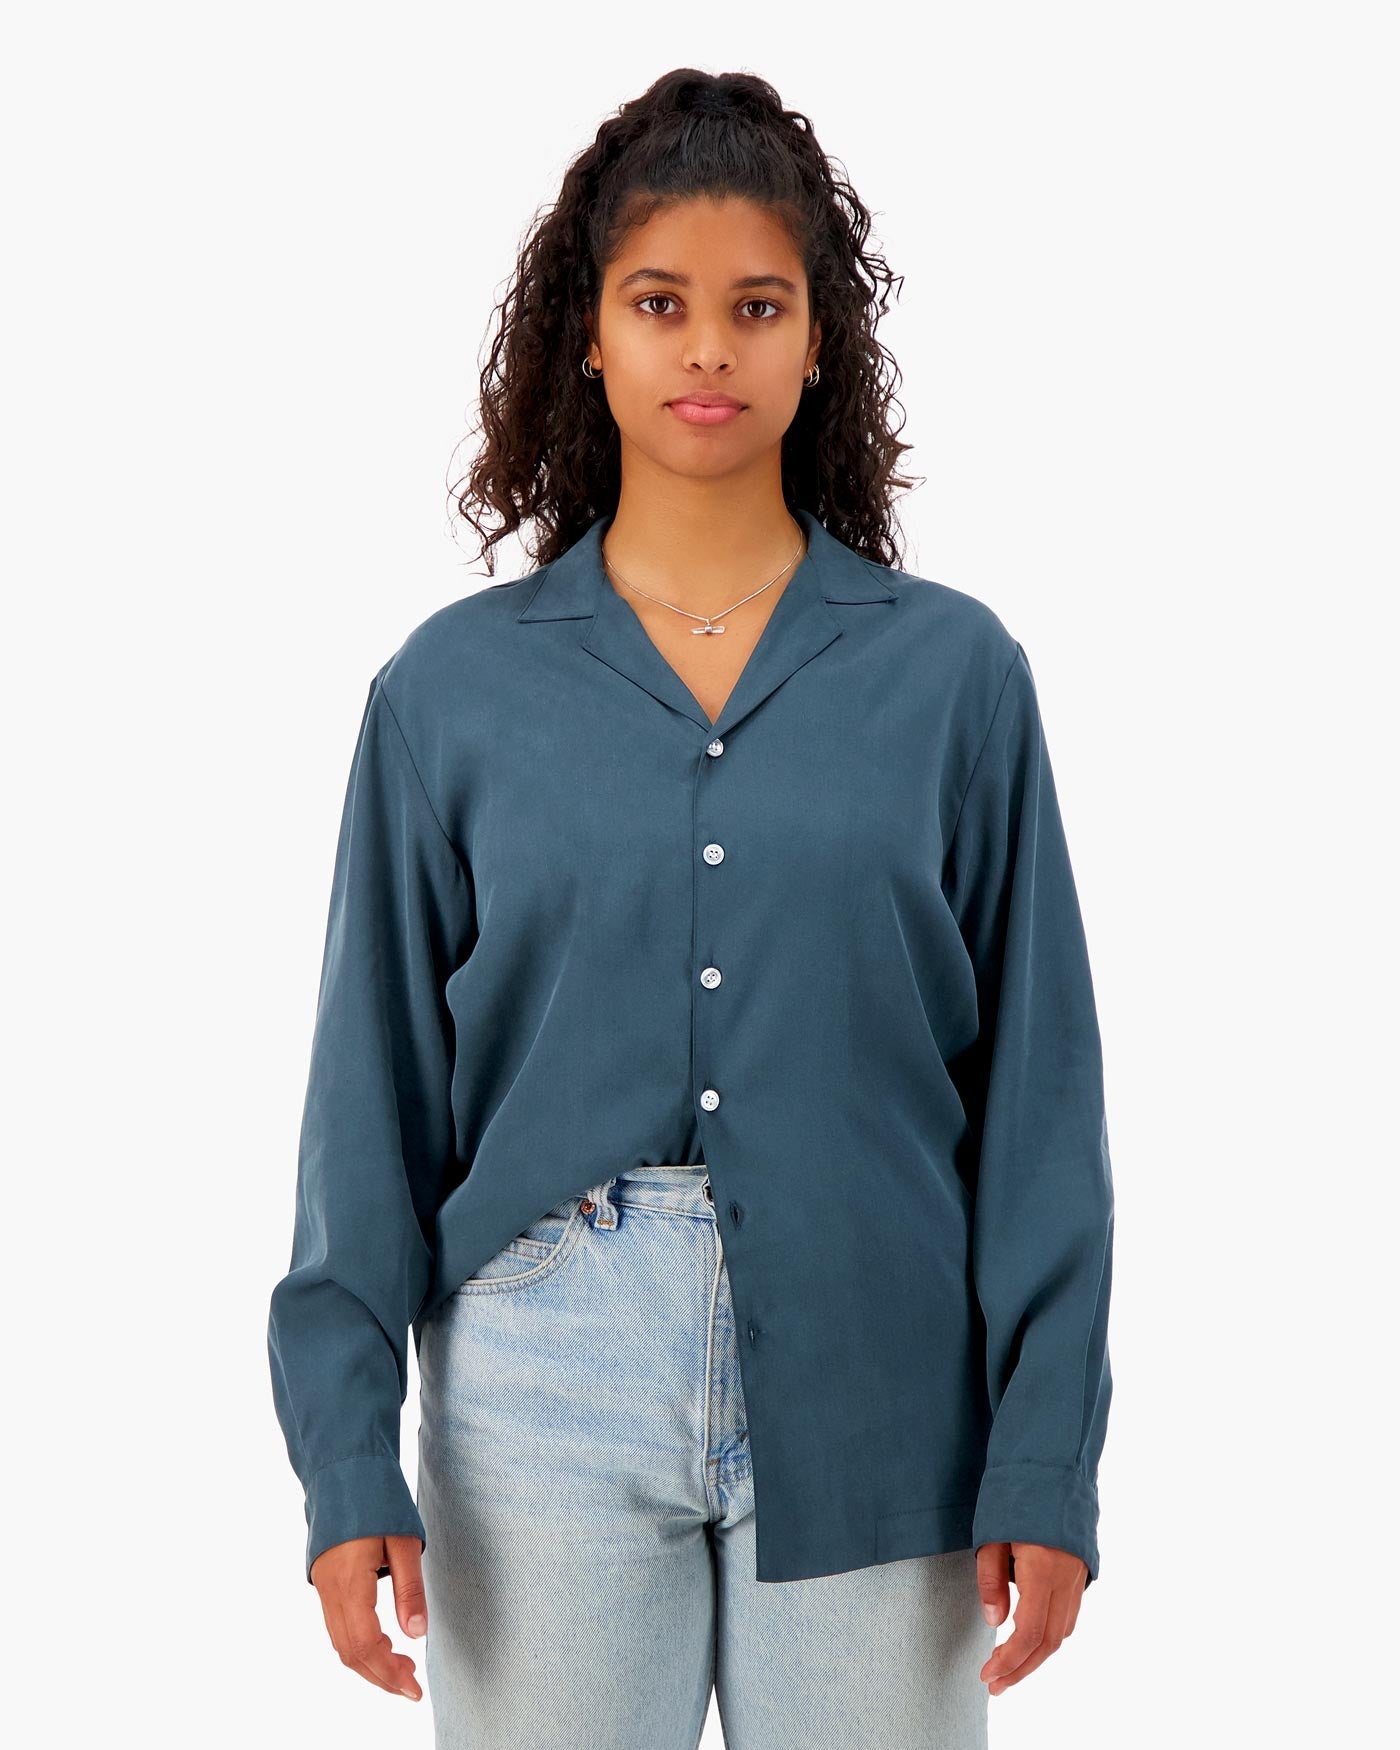 Tencel Notch Collar Shirt in Slate Blue